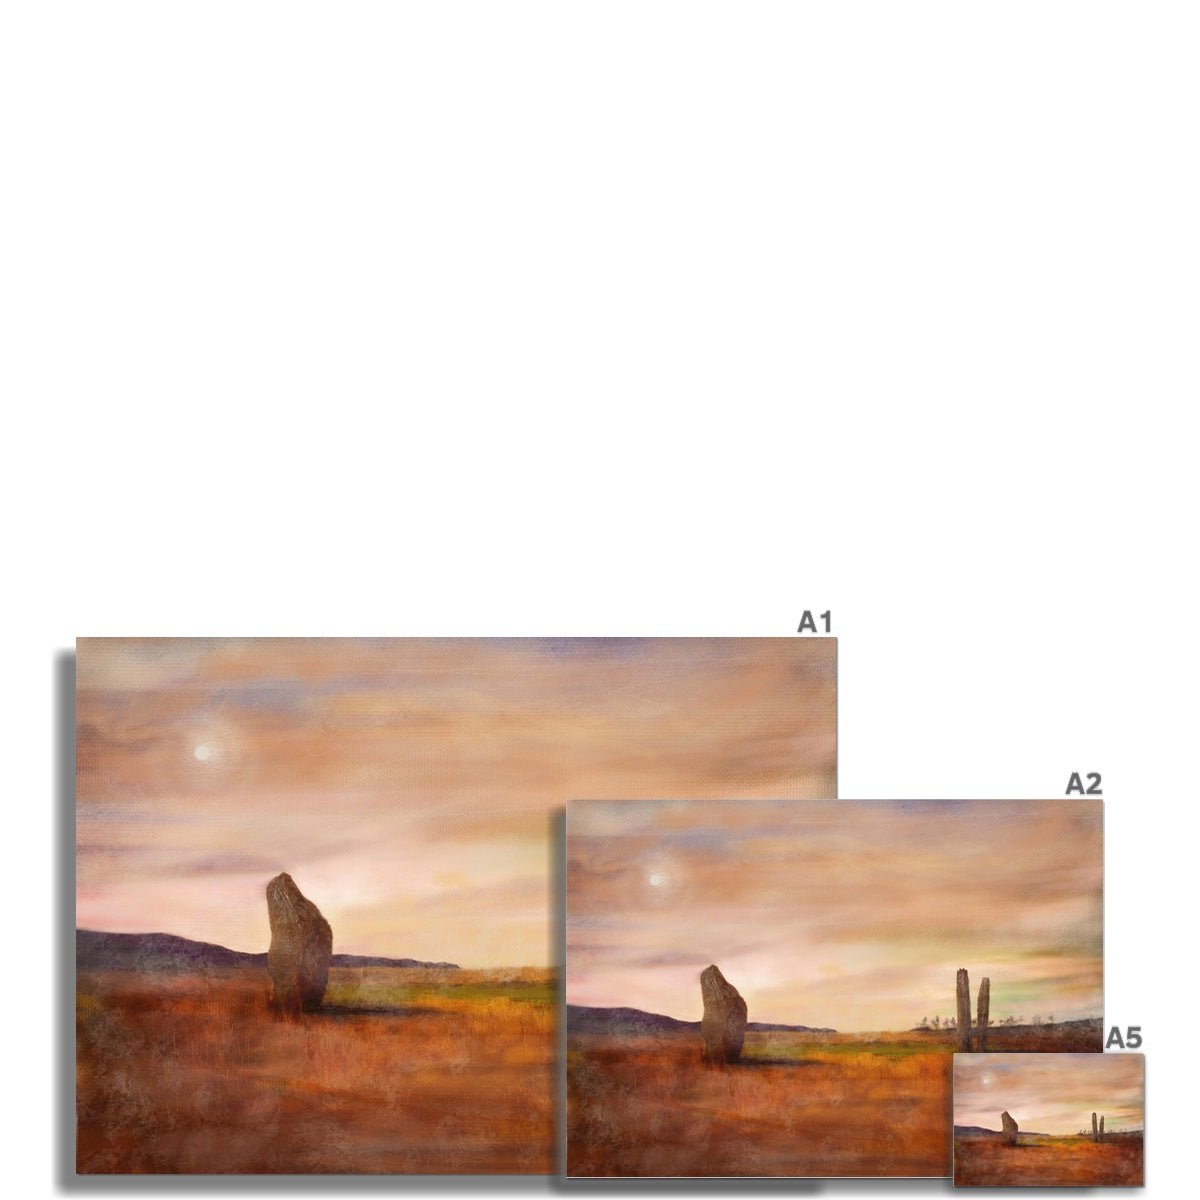 Machrie Moor Moonlight Painting | Fine Art Prints From Scotland-Unframed Prints-Arran Art Gallery-Paintings, Prints, Homeware, Art Gifts From Scotland By Scottish Artist Kevin Hunter